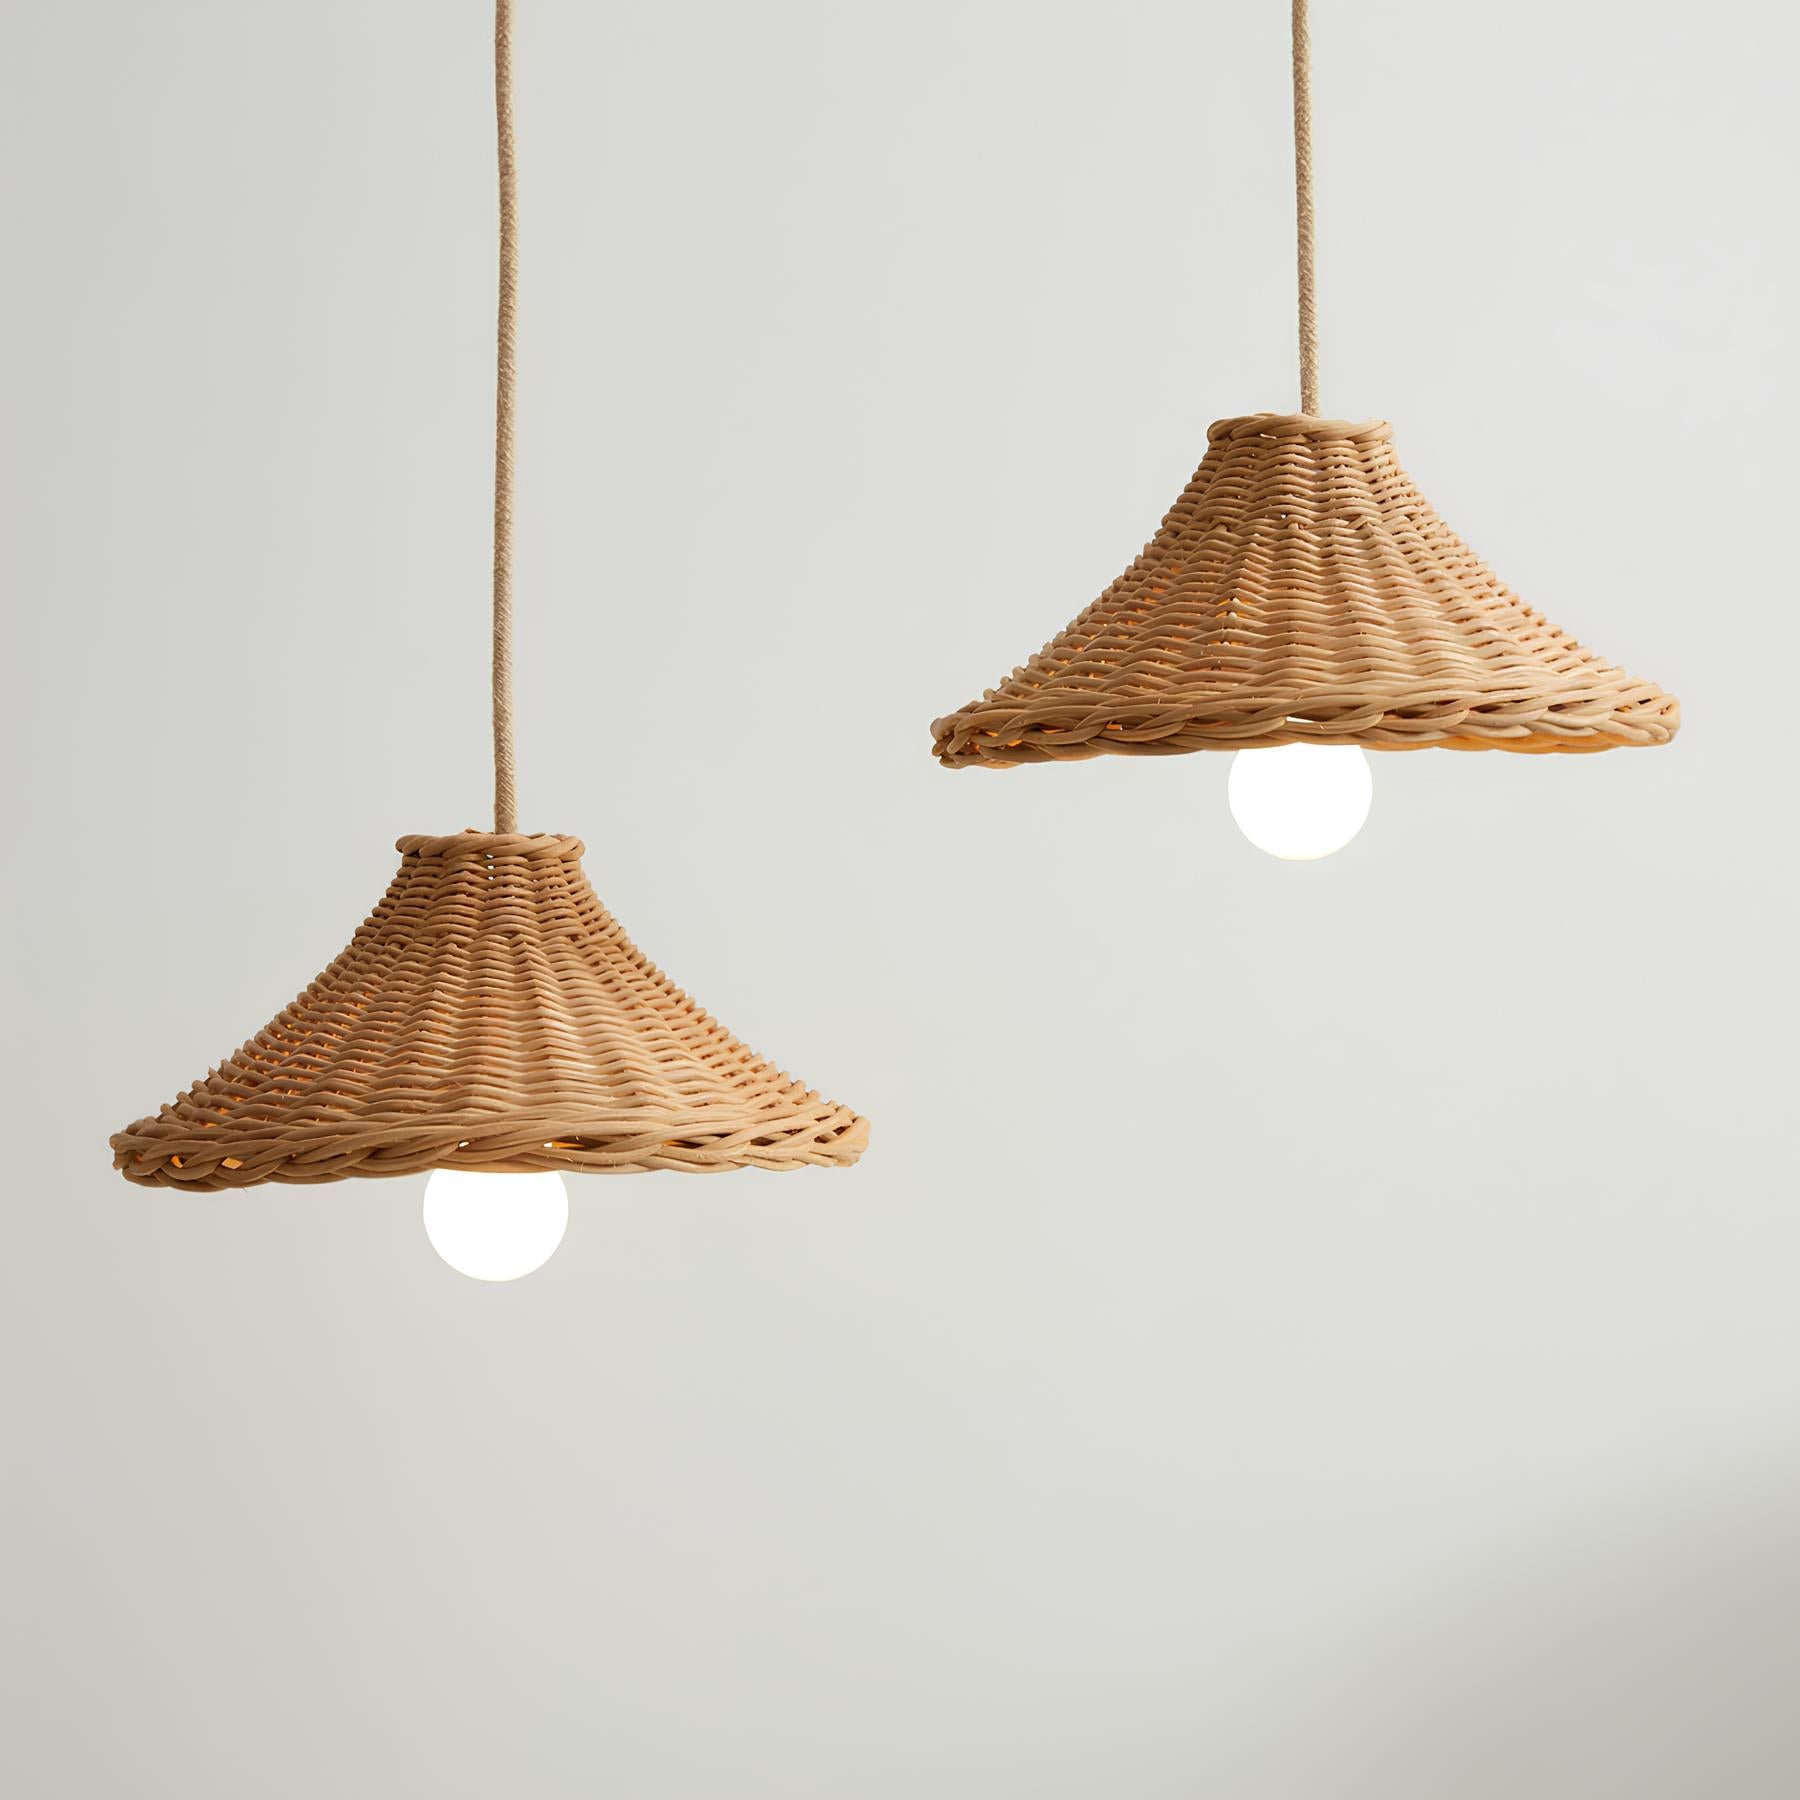 Bamboo Hanging lamp for Living Room | Rattan Pendant light | Cane ceiling light - Jivan - Akway